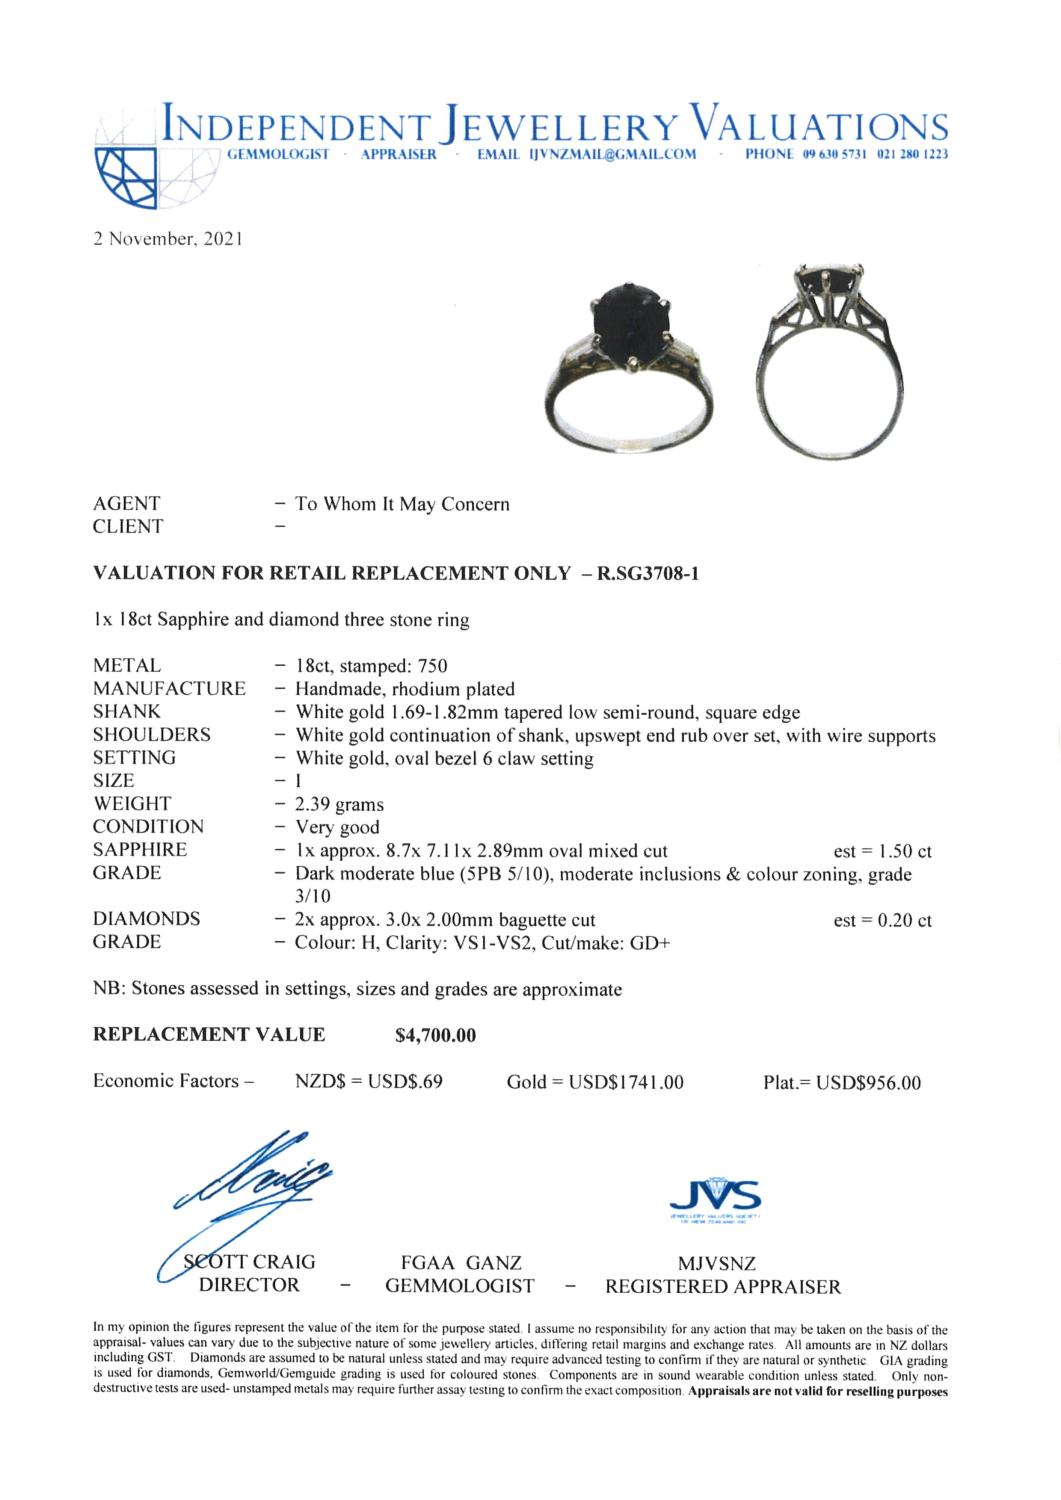 18ct Sapphire and Diamond Ring - Price Estimate: $1200 - $1600